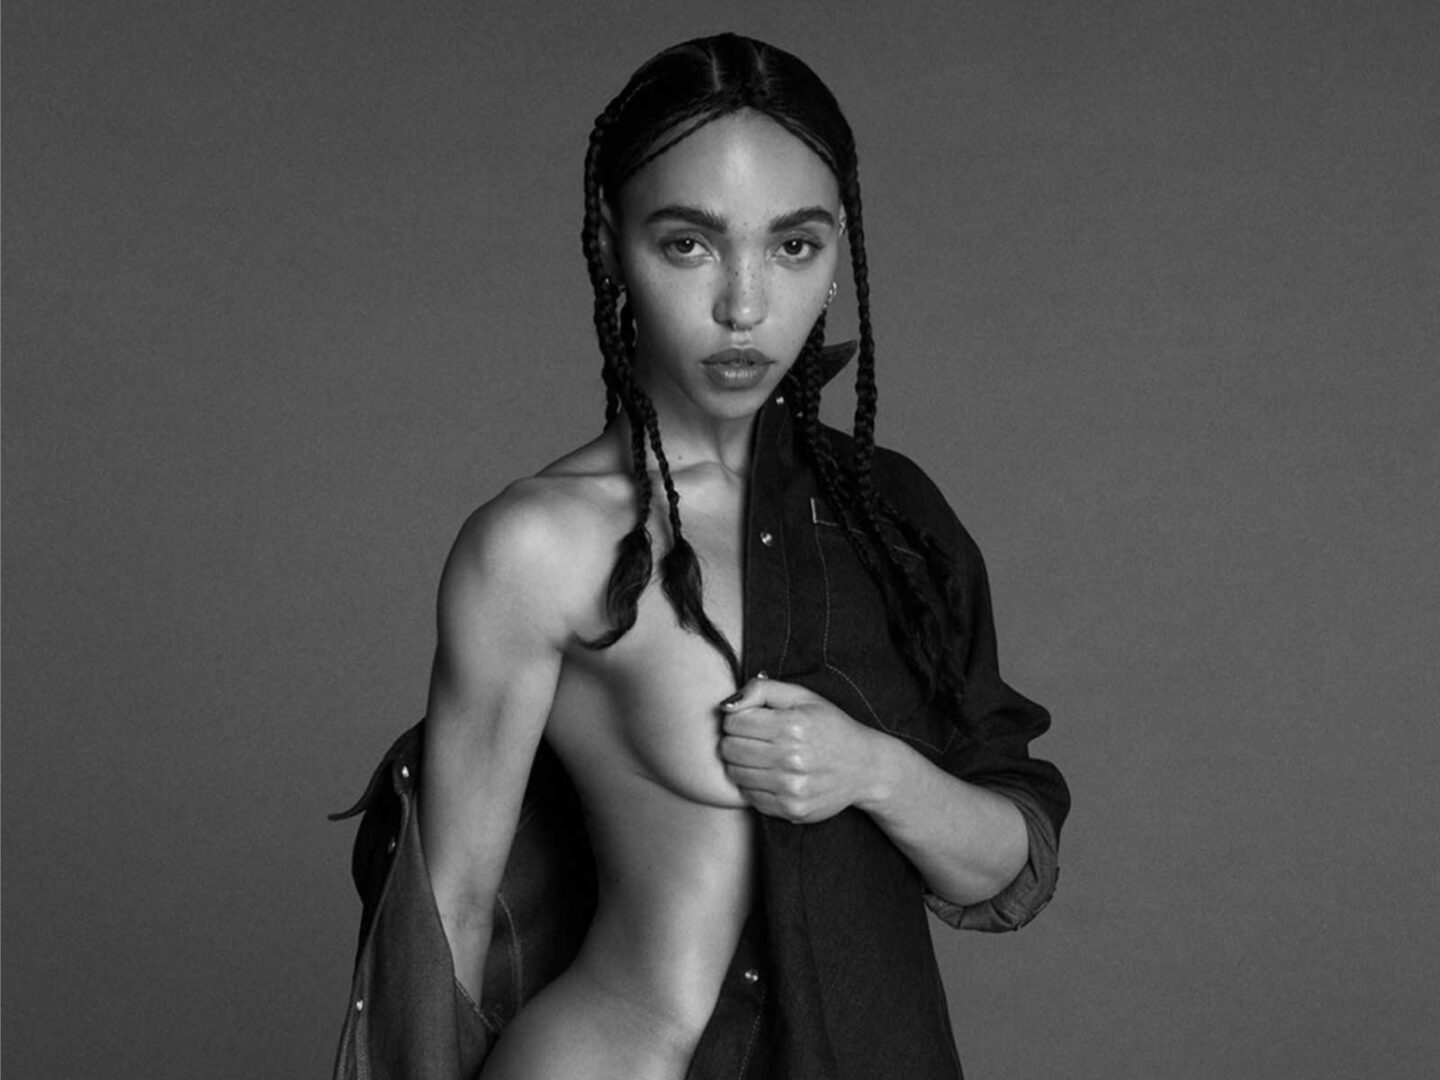 UK bans Calvin Klein advert featuring FKA twigs for ‘objectifying women’